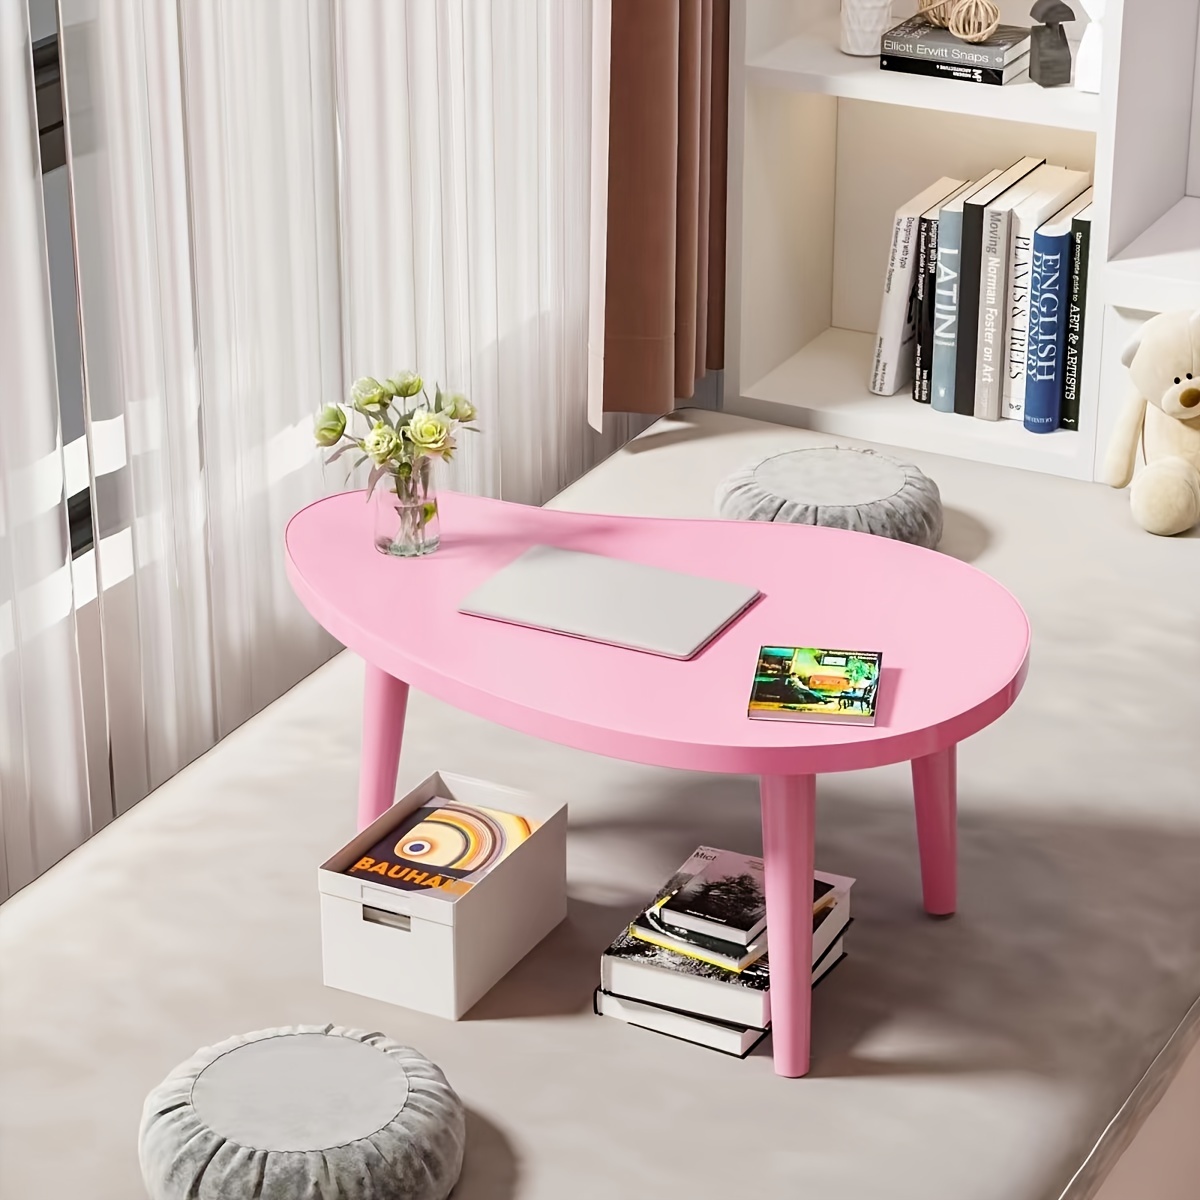 PINNKL Side Tables Living Room Industrial wind bedside table/tea